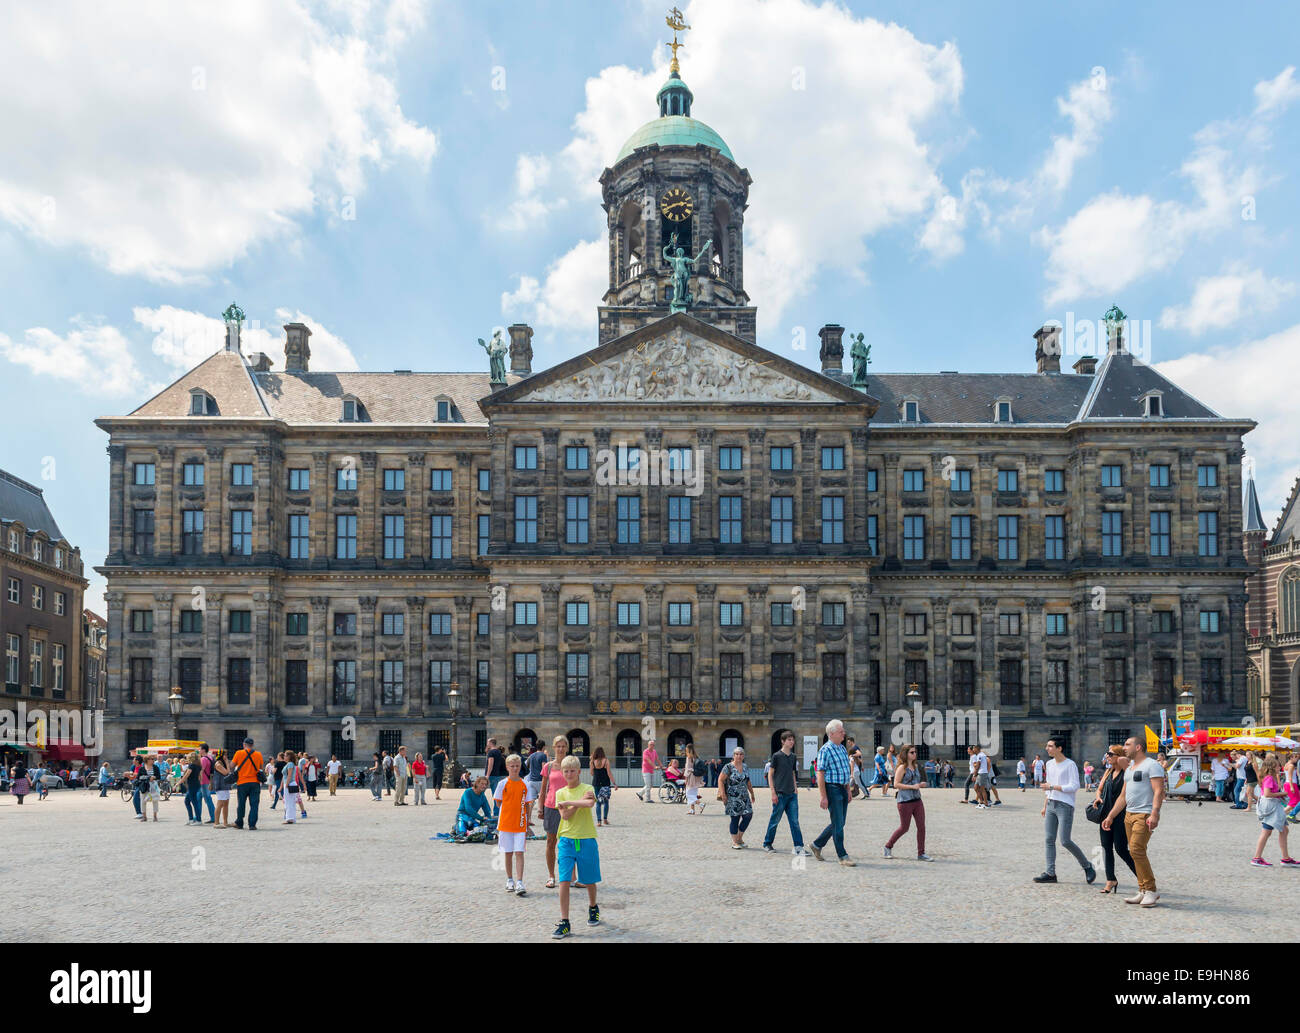 Royal Palace, Dam square, Amsterdam, Netherlands Stock Photo